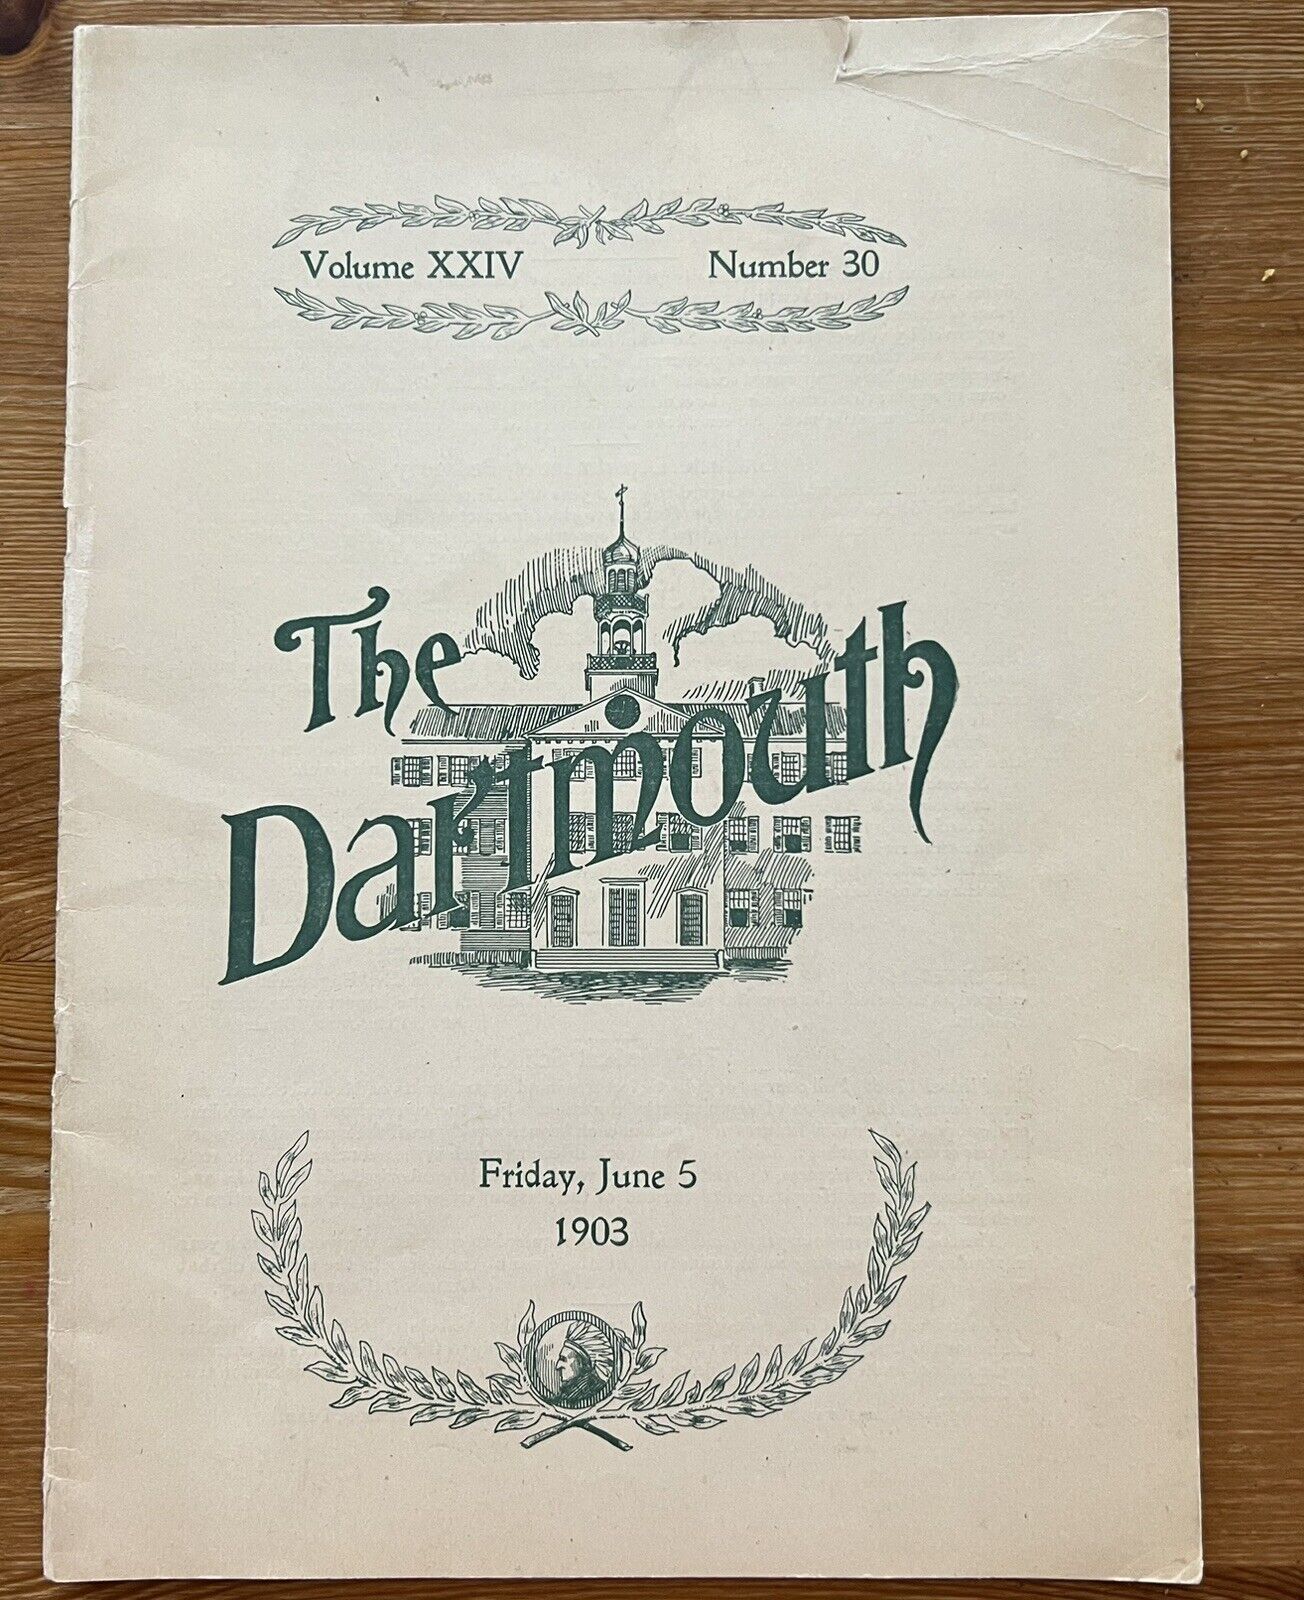 ATQ 1903 Dartmouth Magazine Vol 24 Issue 30 Many Local Business Advertisement